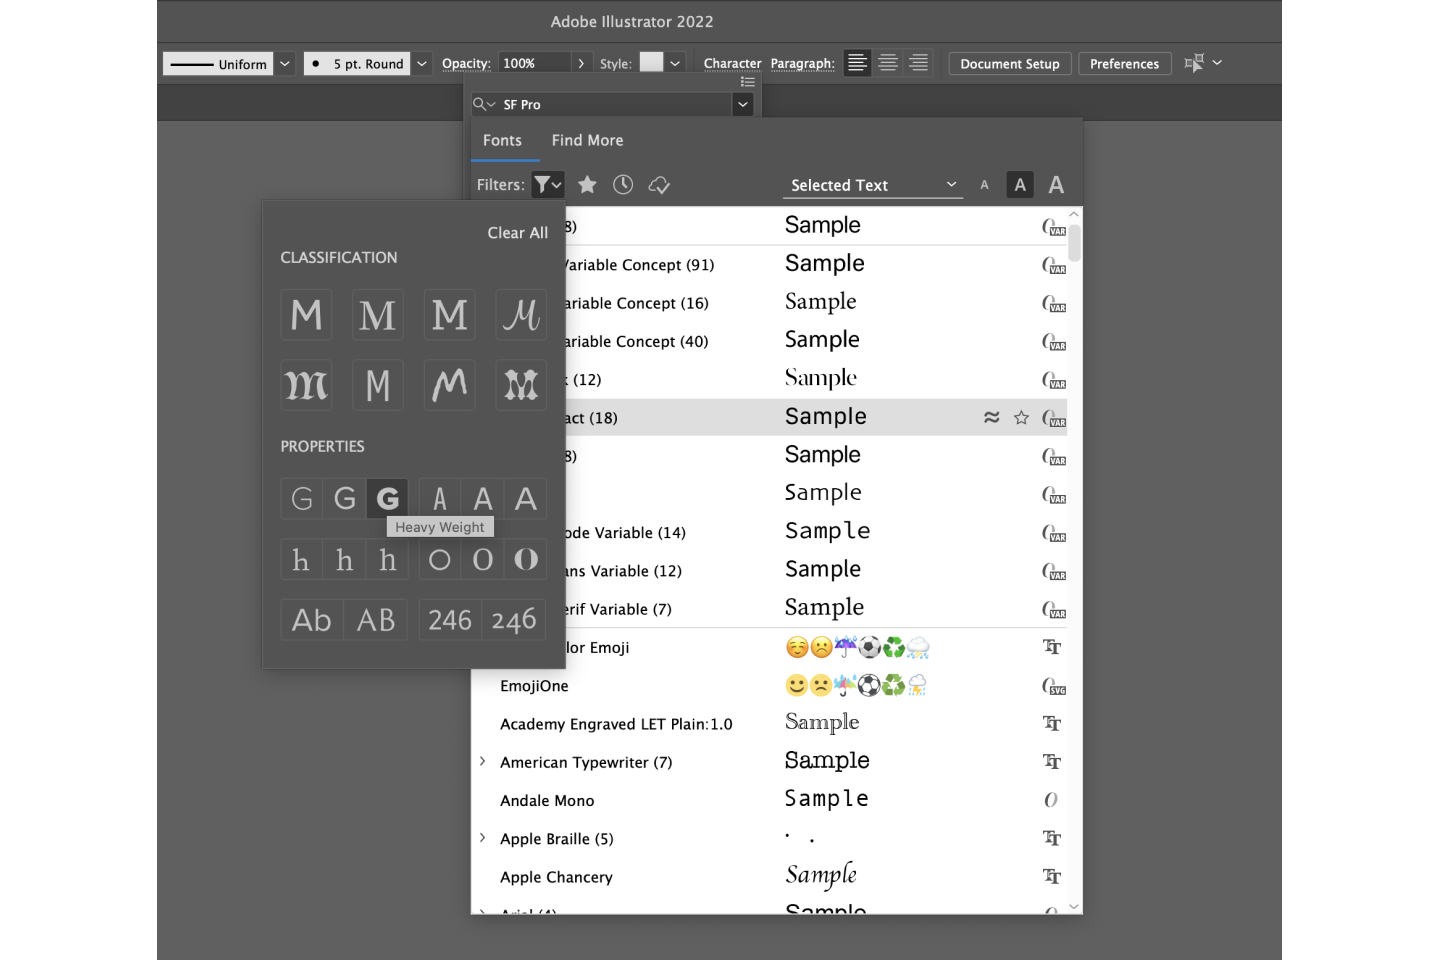 Adobe Illustrator Typekit properties